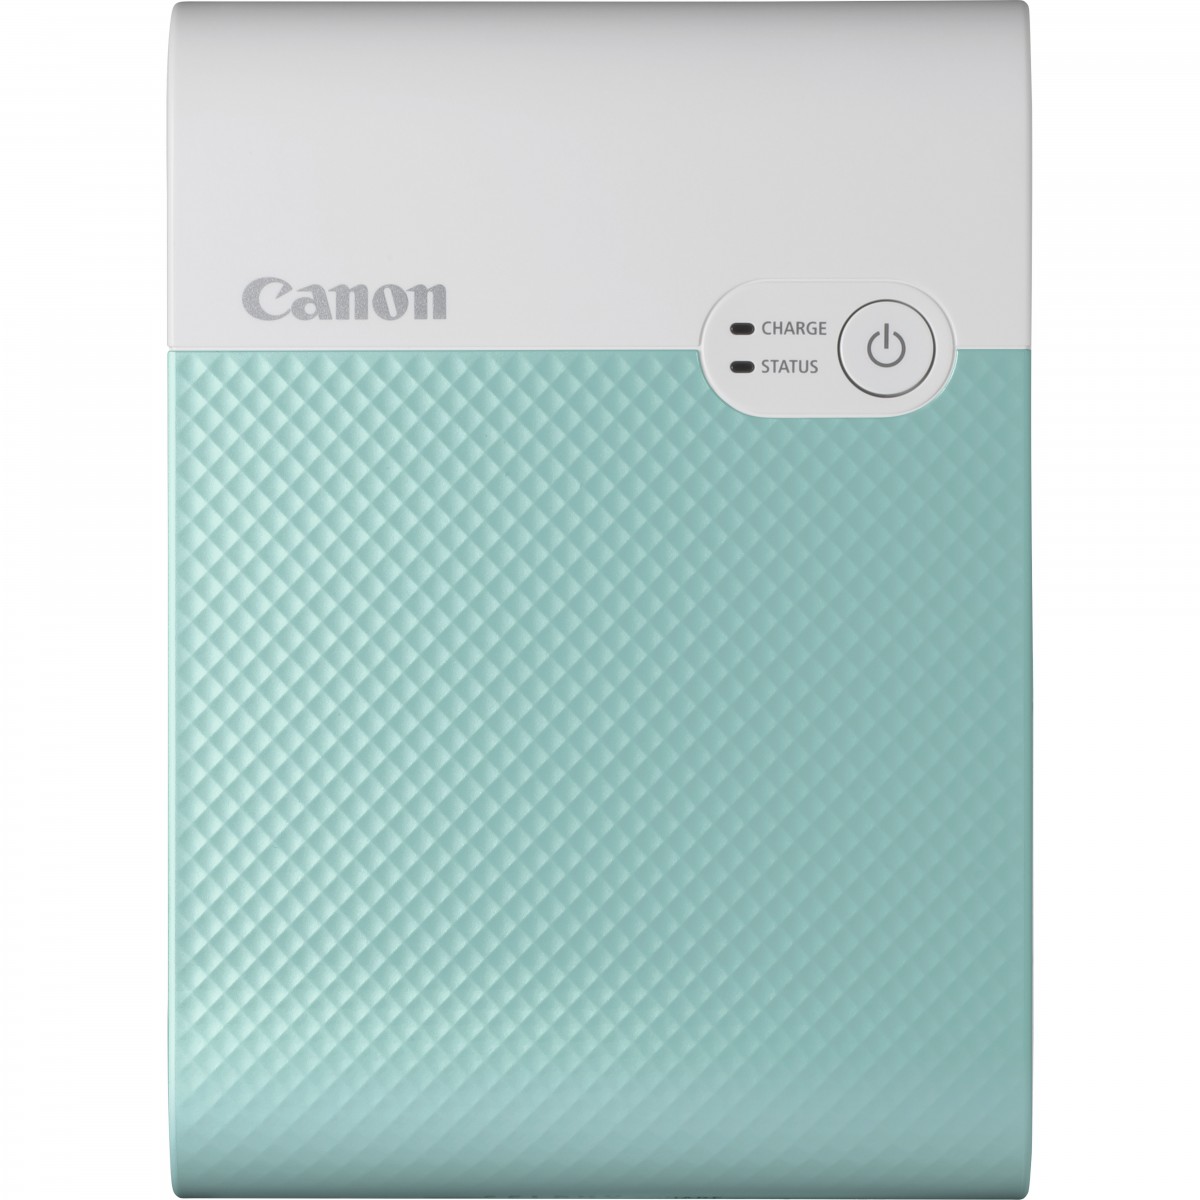 Canon SELPHY Square QX10 - Dye-sublimation - 287 x 287 DPI - Borderless printing - Wi-Fi - Mint colour